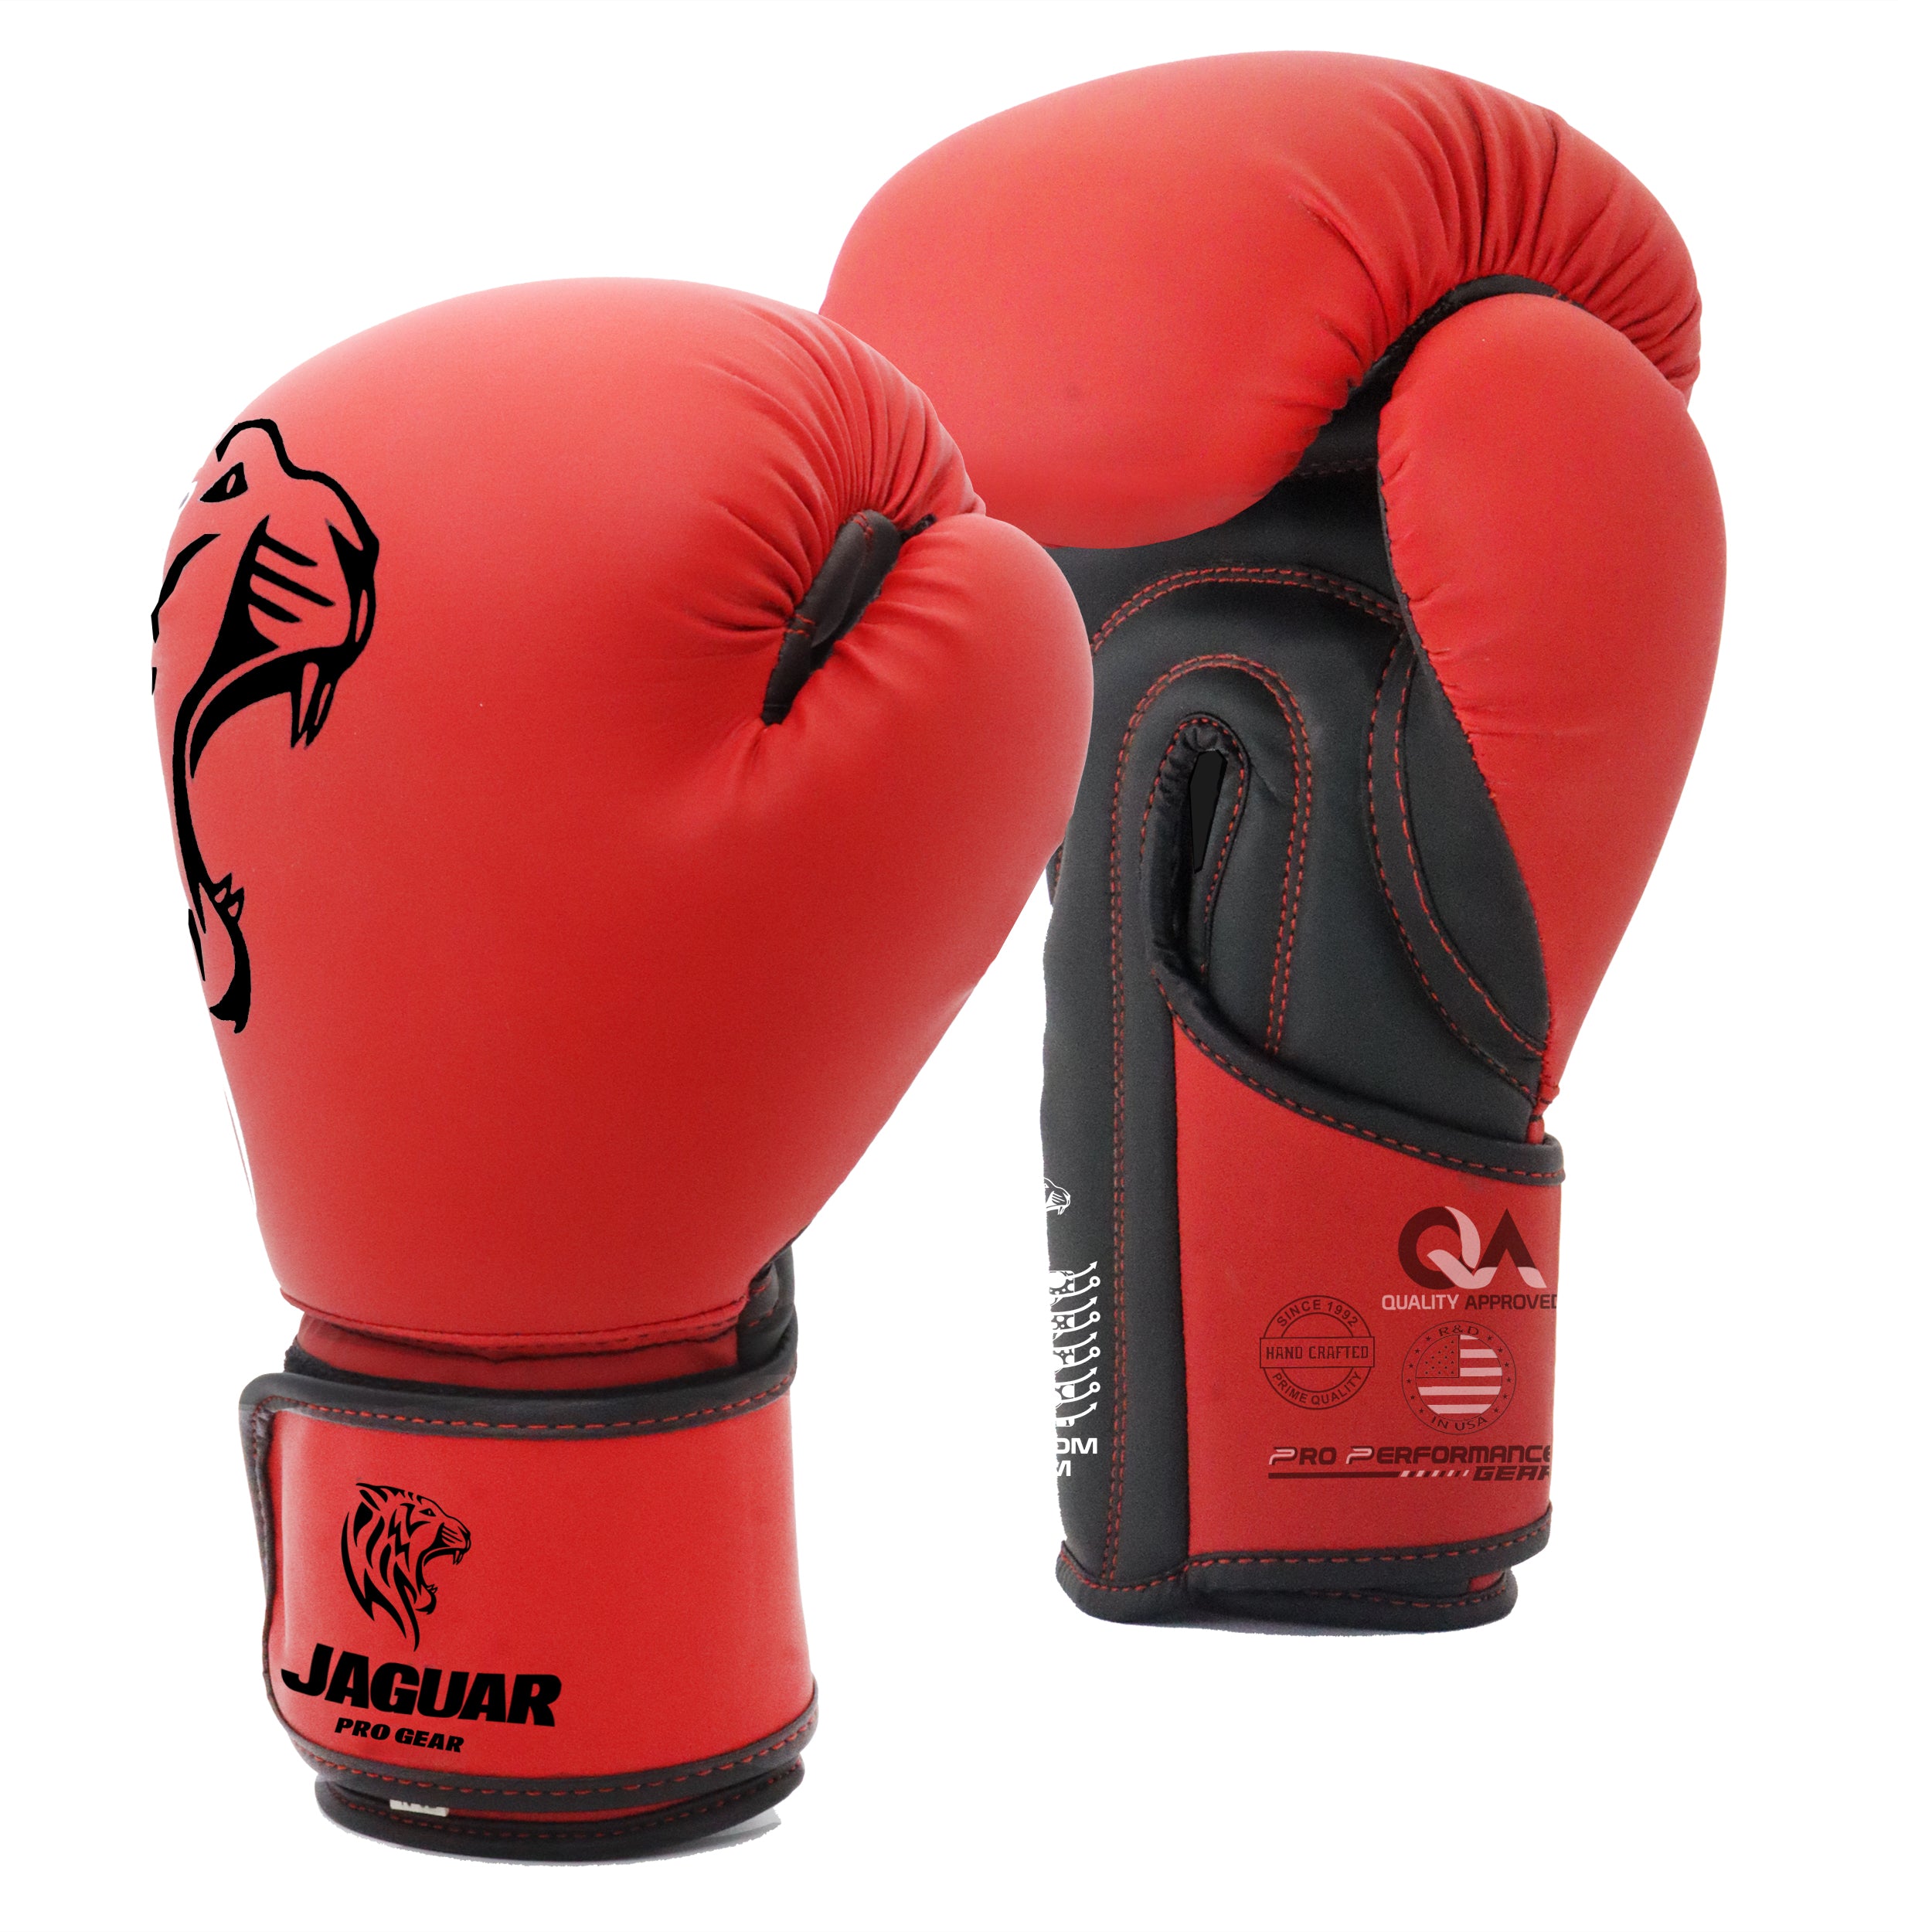 Jaguar Pro Boxing – Gloves Gear